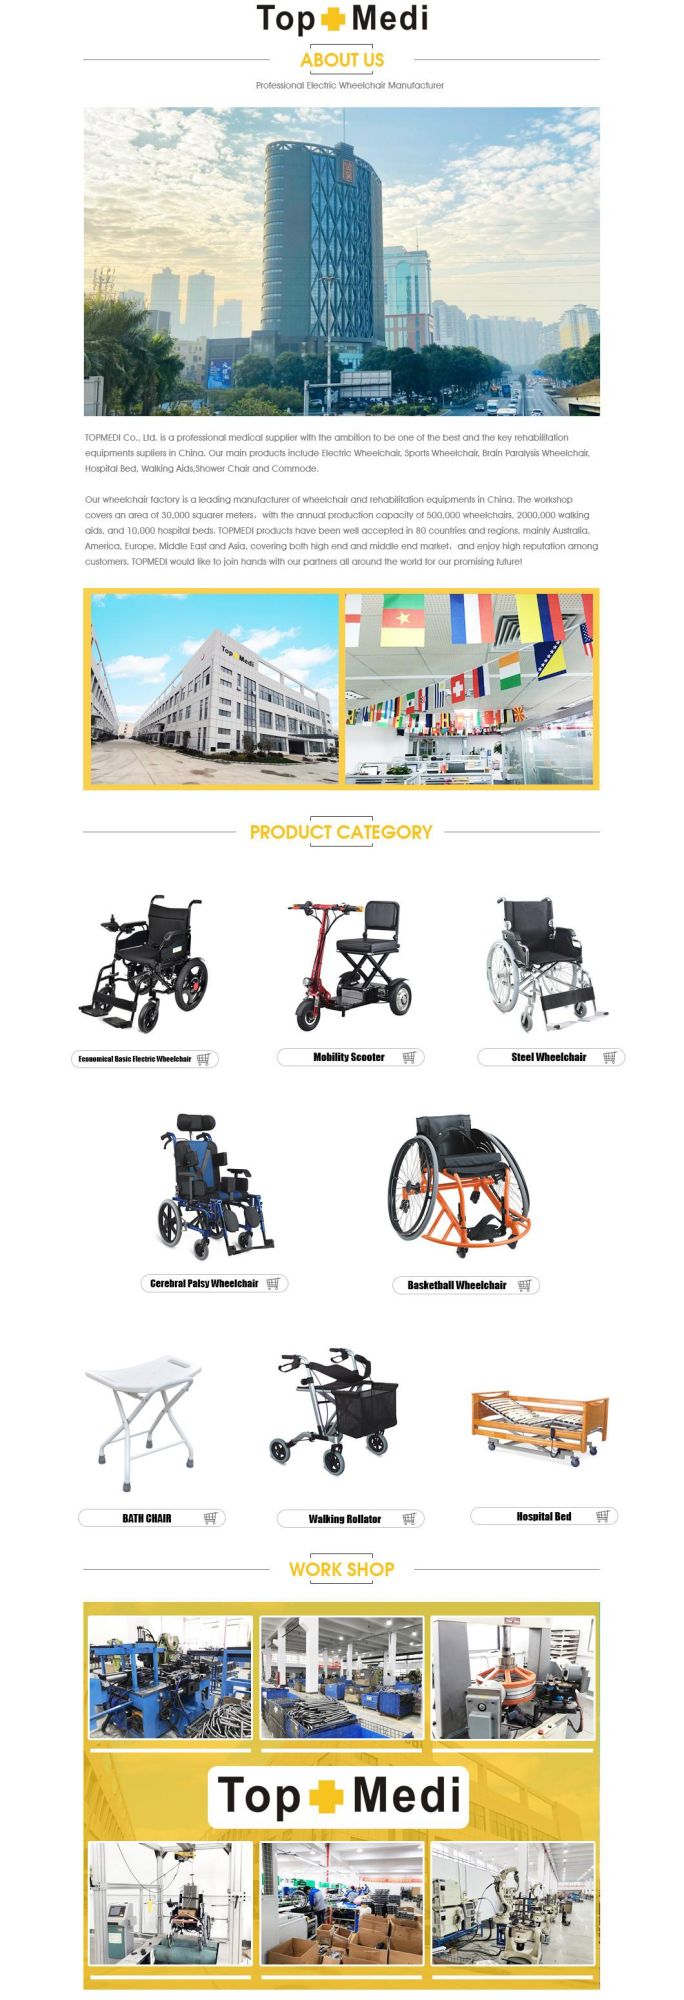 Topmedi Hot Sales Top Quality Powder Steel Electric Wheelchair